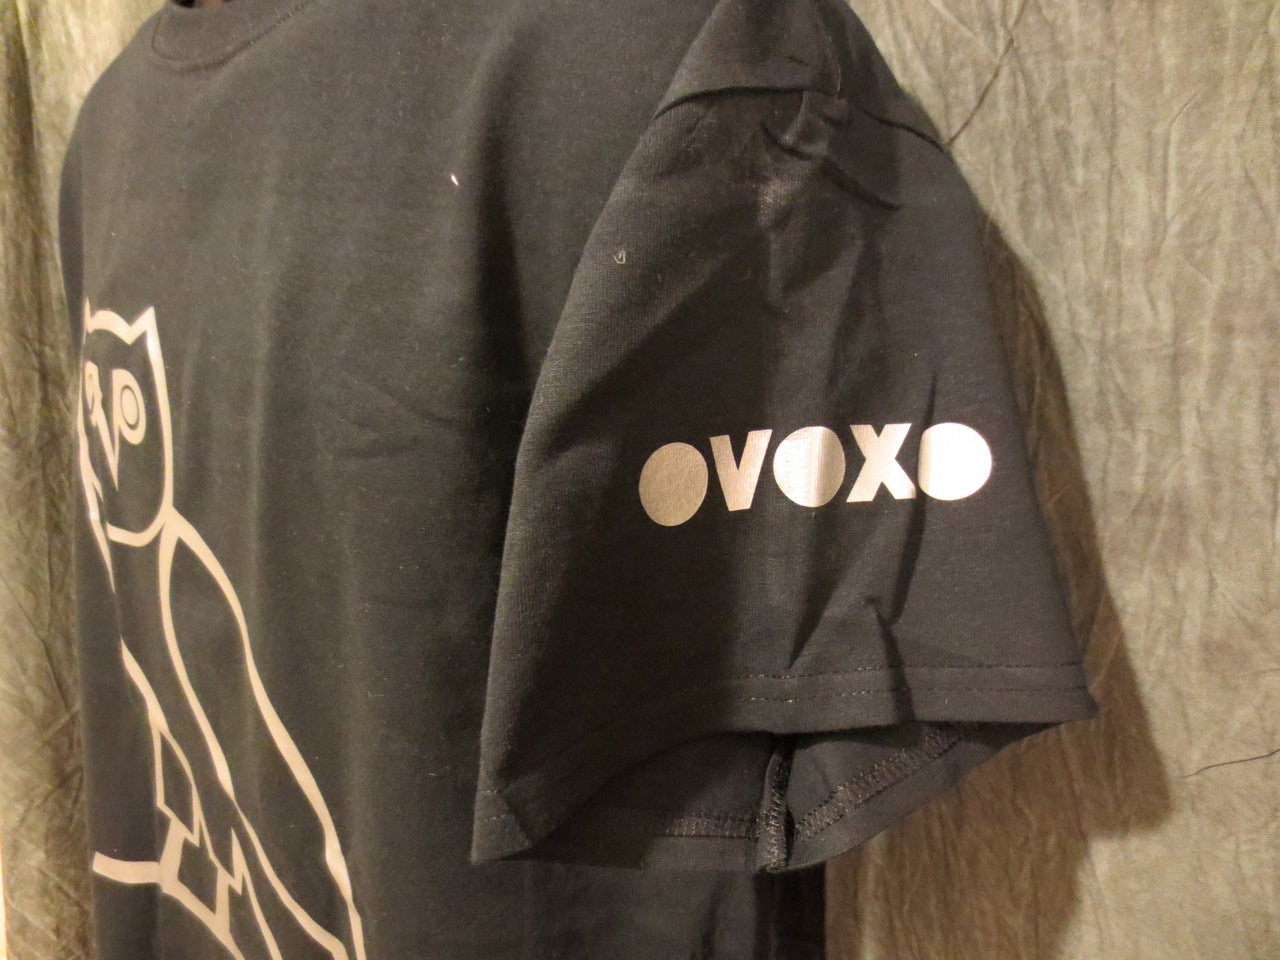 Ovo Drake October's Very Own "Ovoxo Owl Gang" Tshirt - TshirtNow.net - 7